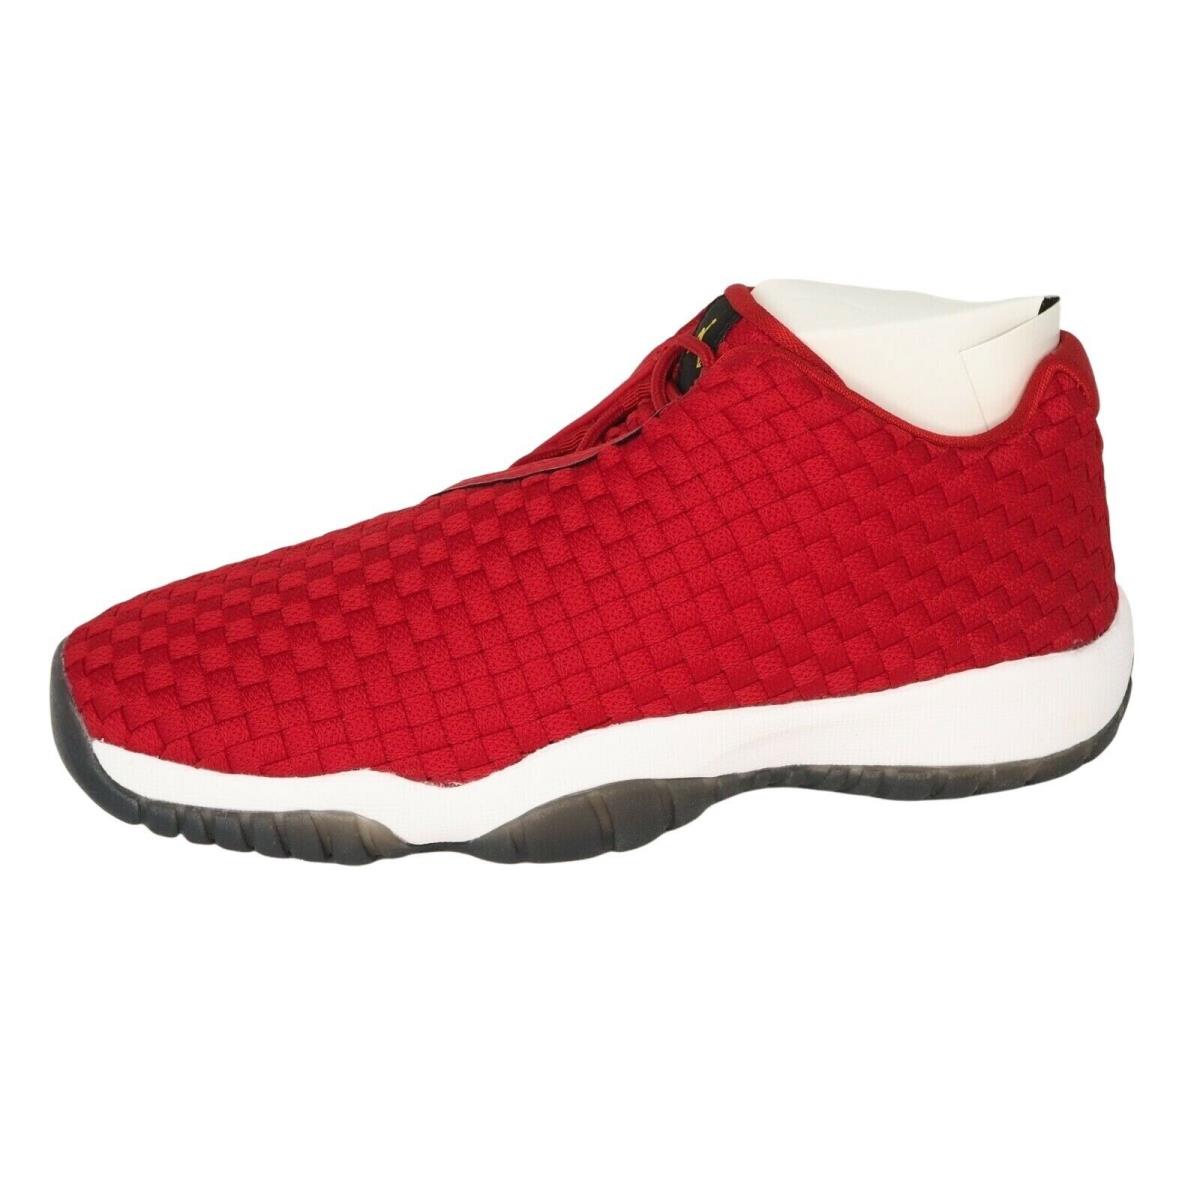 Nike Air Jordan Future Low Boys Basketball Sneaker 724813 600 Shoes Red Size 6